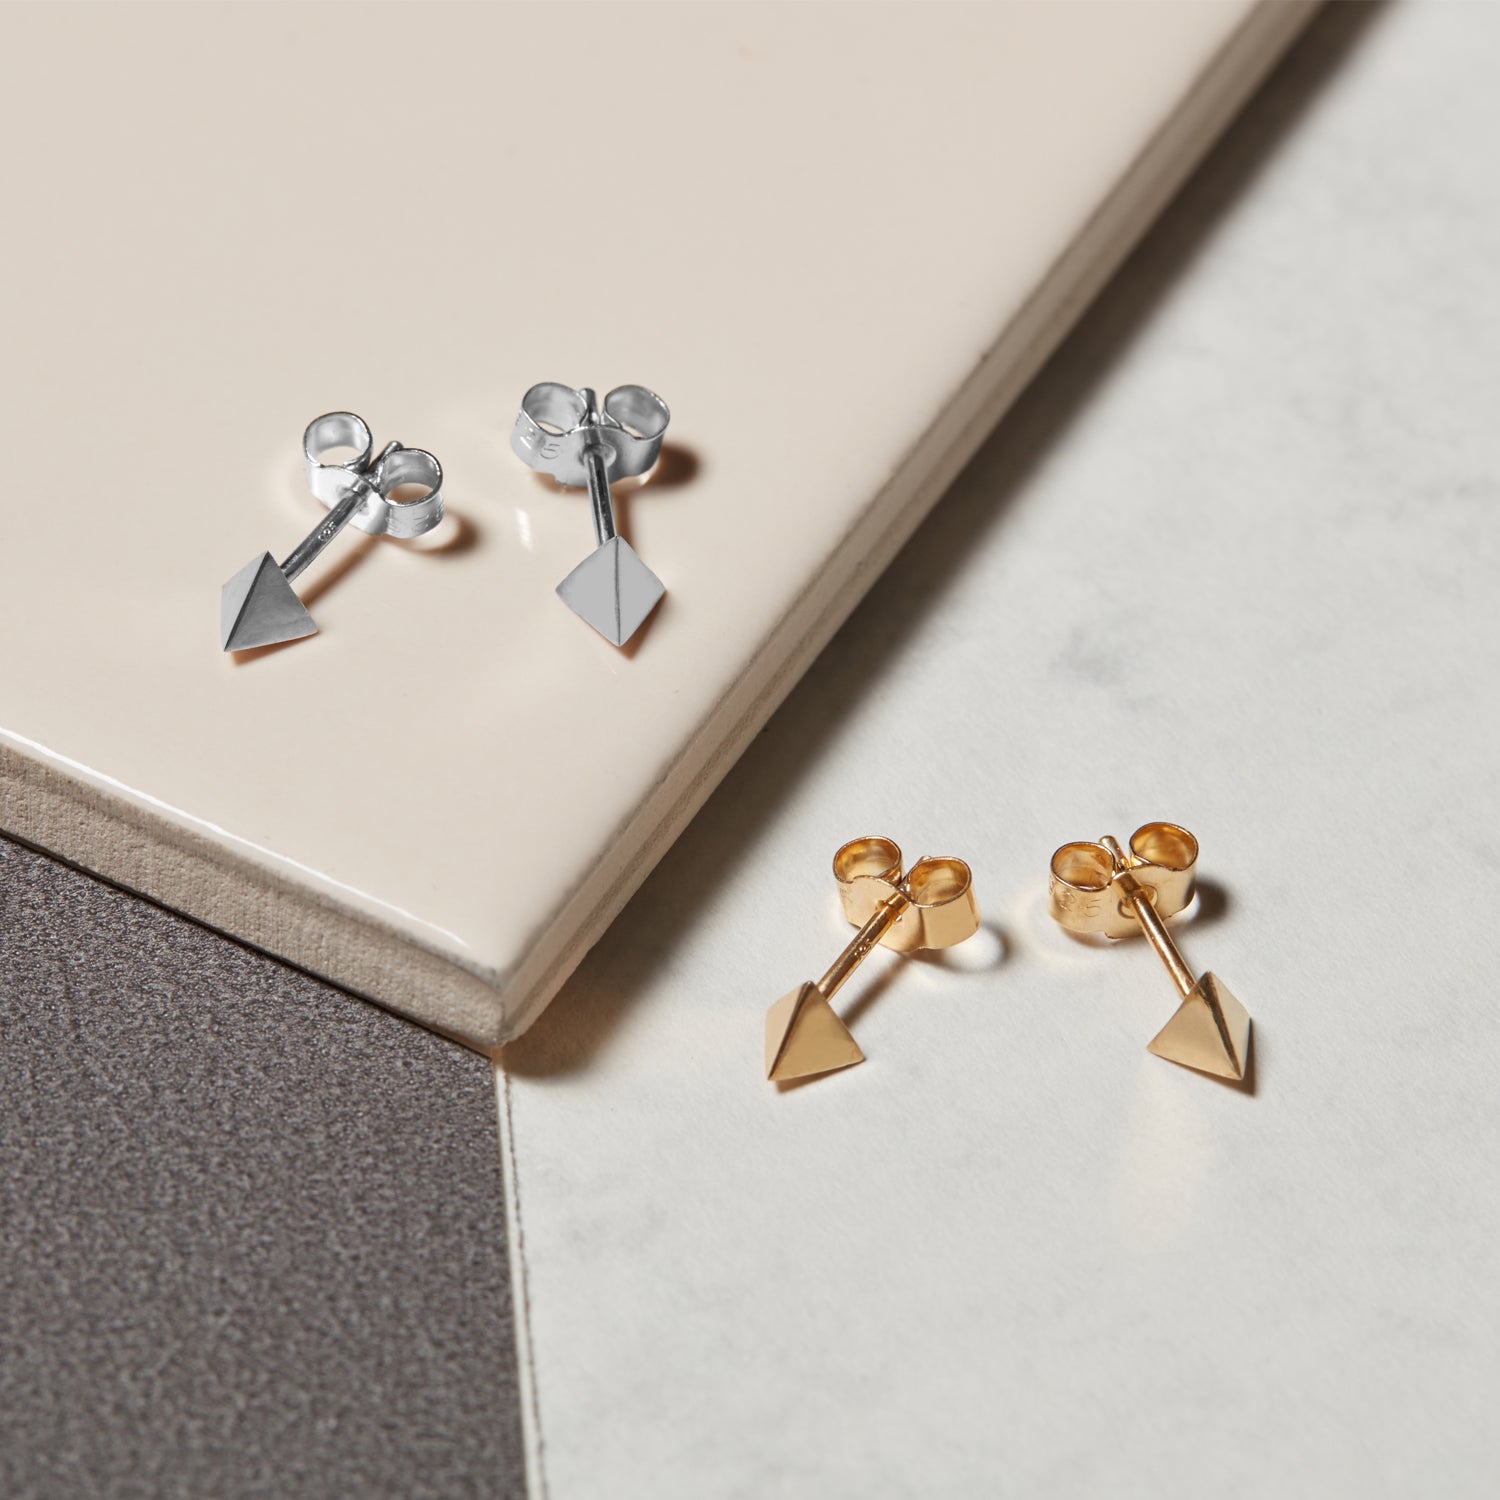 Tetrahedron Stud Earrings - Gold - Myia Bonner Jewellery